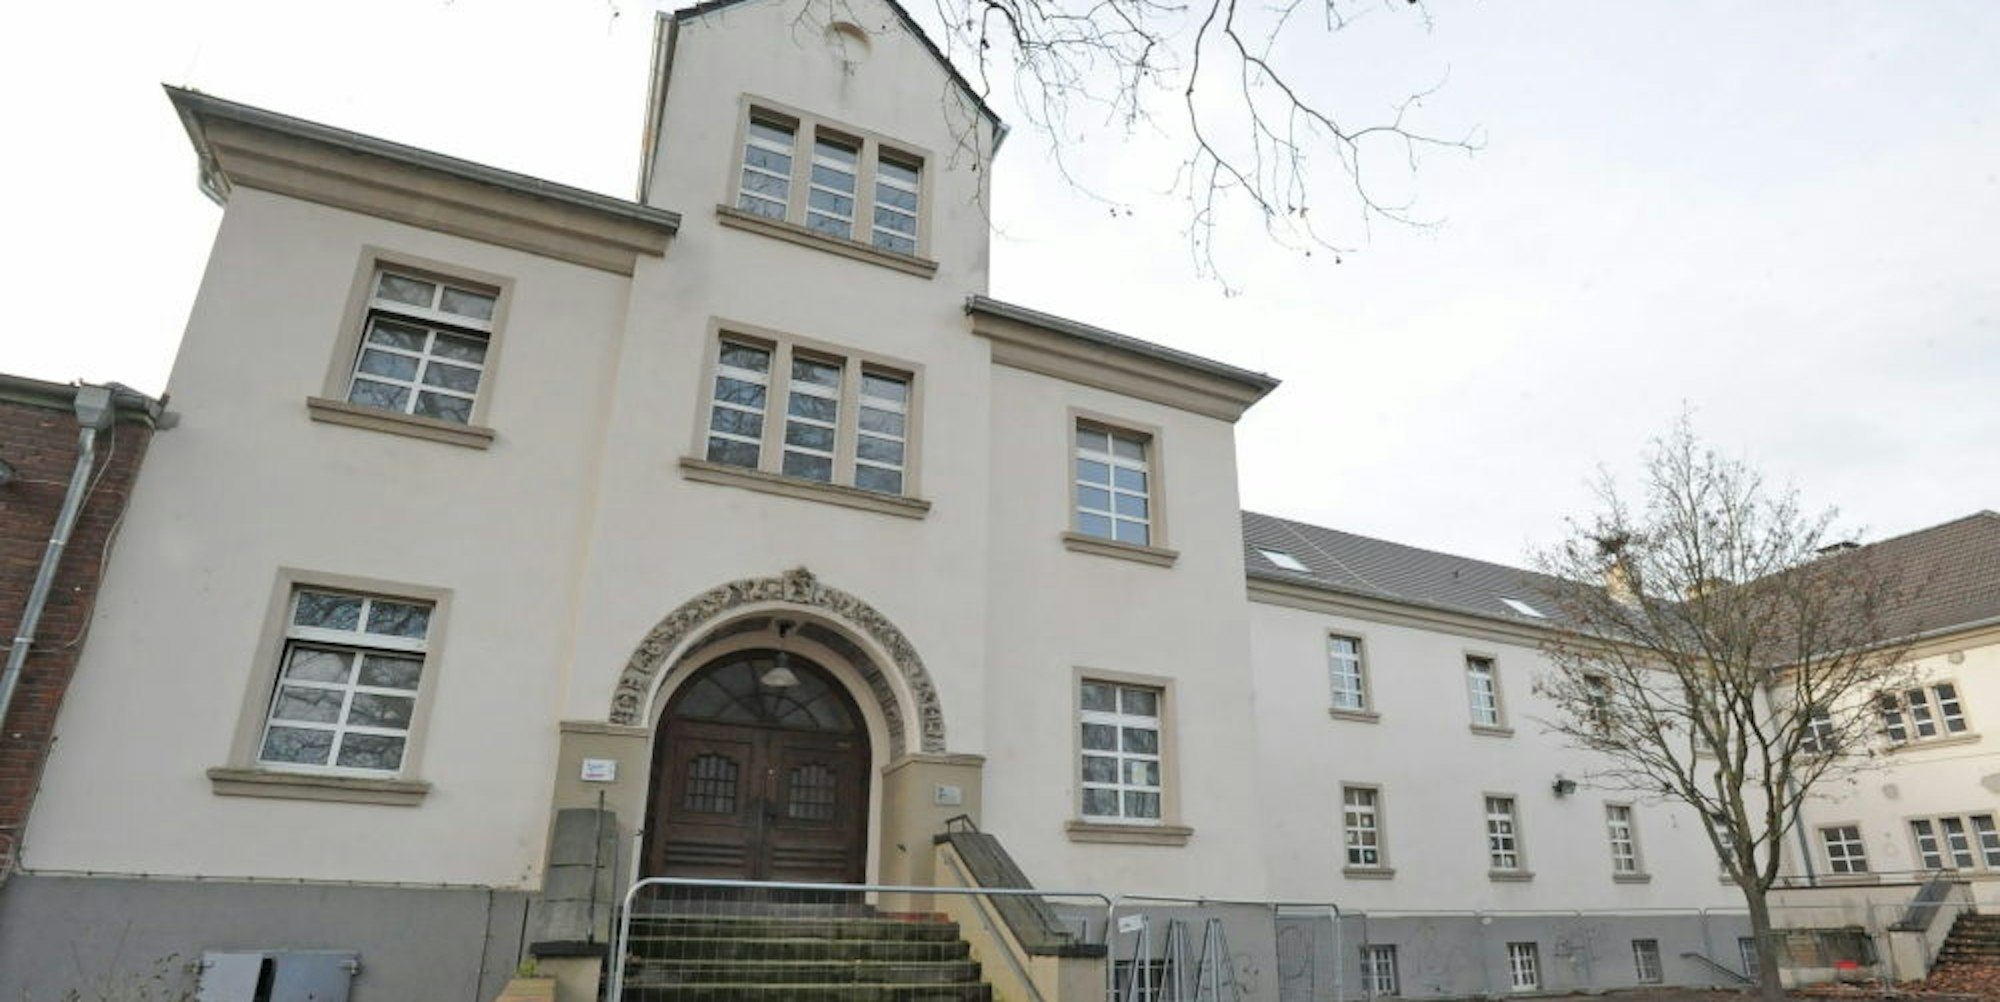 Gemeinschaftsgrundschule im Steinfeld